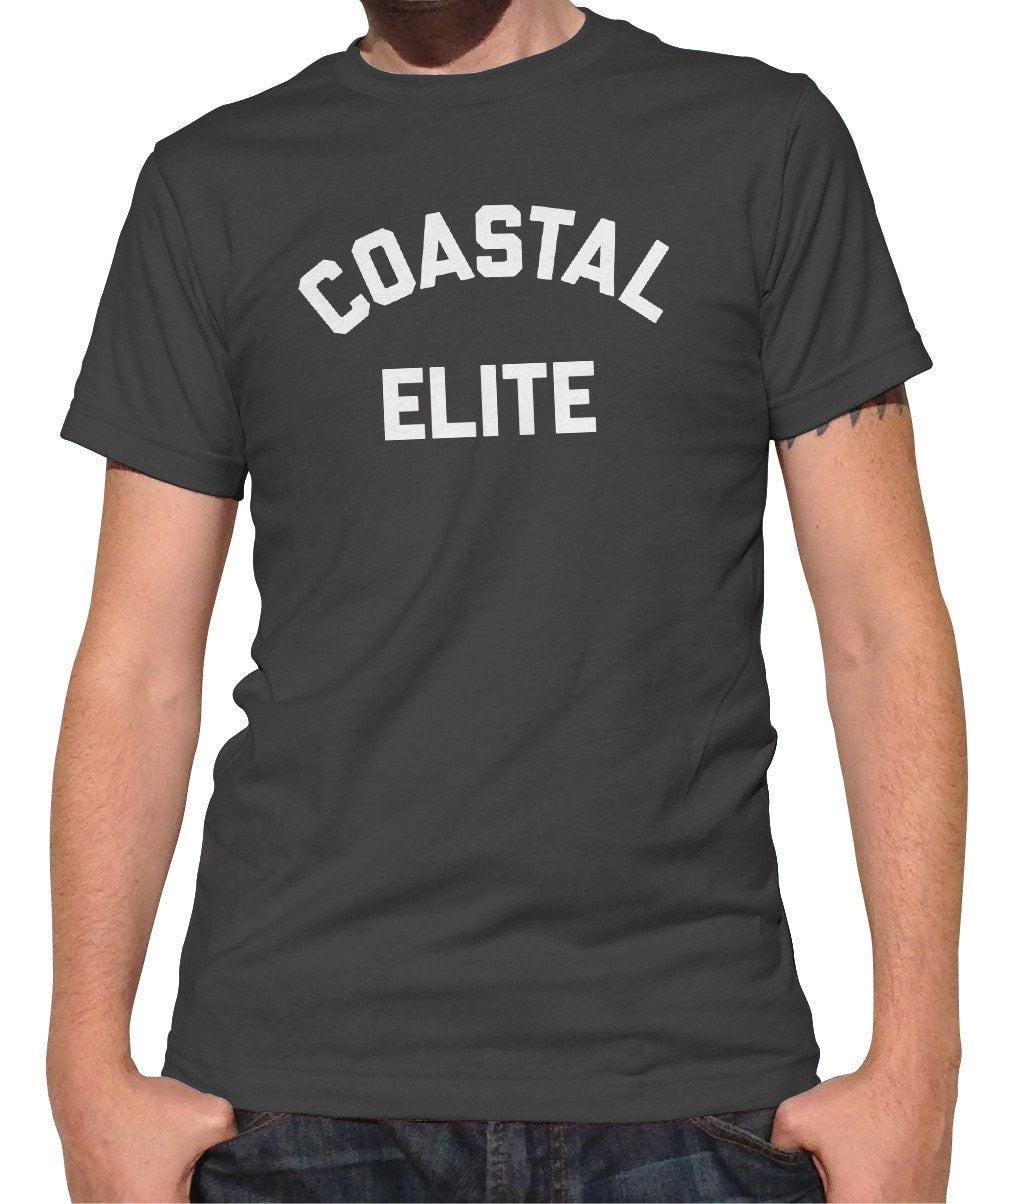 Men's Coastal Elite T-Shirt